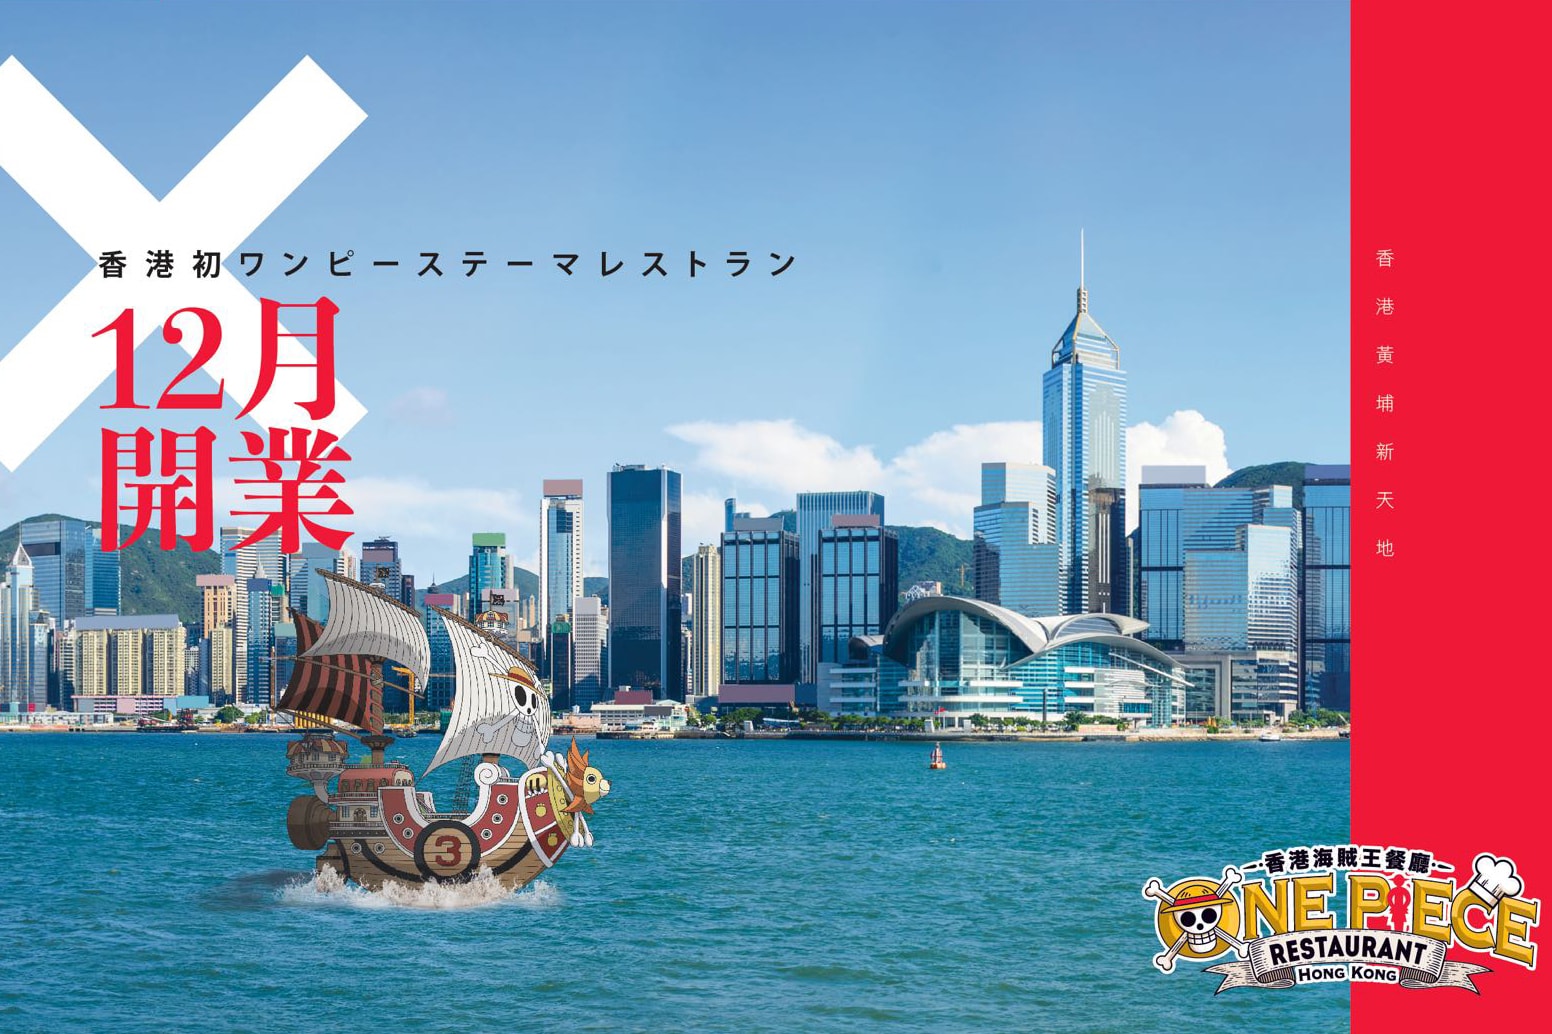 One Piece Restaurant 海賊王主題餐廳將登陸香港